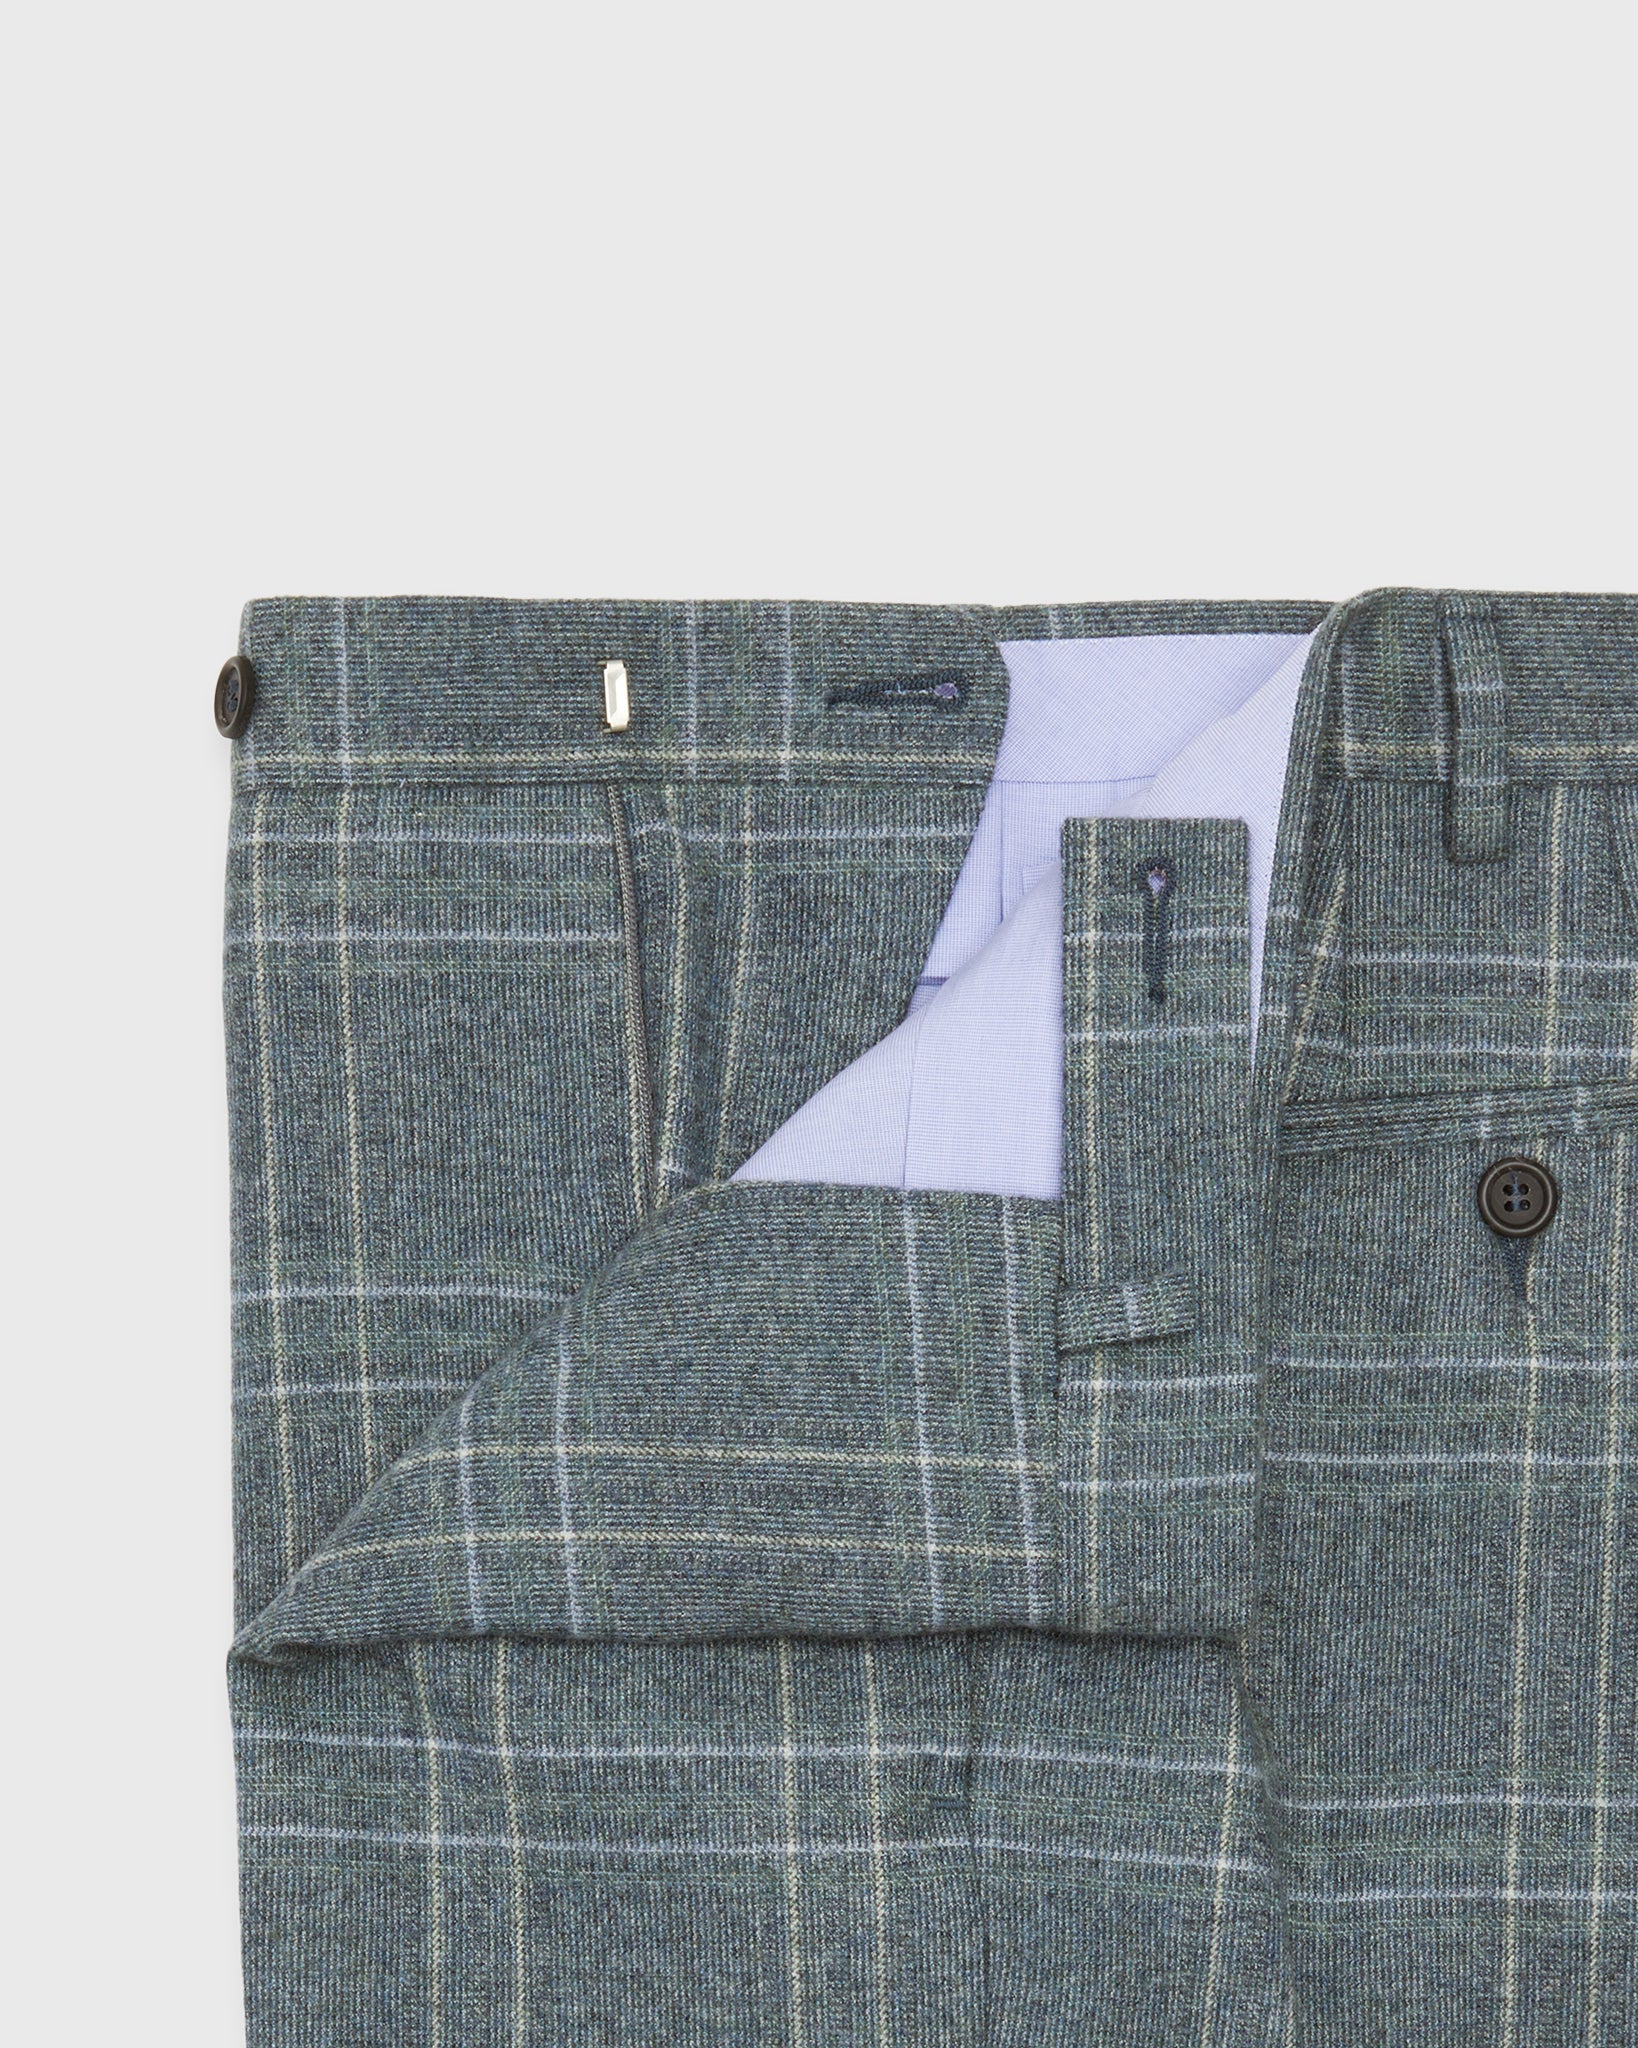 Dress Trouser in Grey/Lovat Mix Plaid Flannel